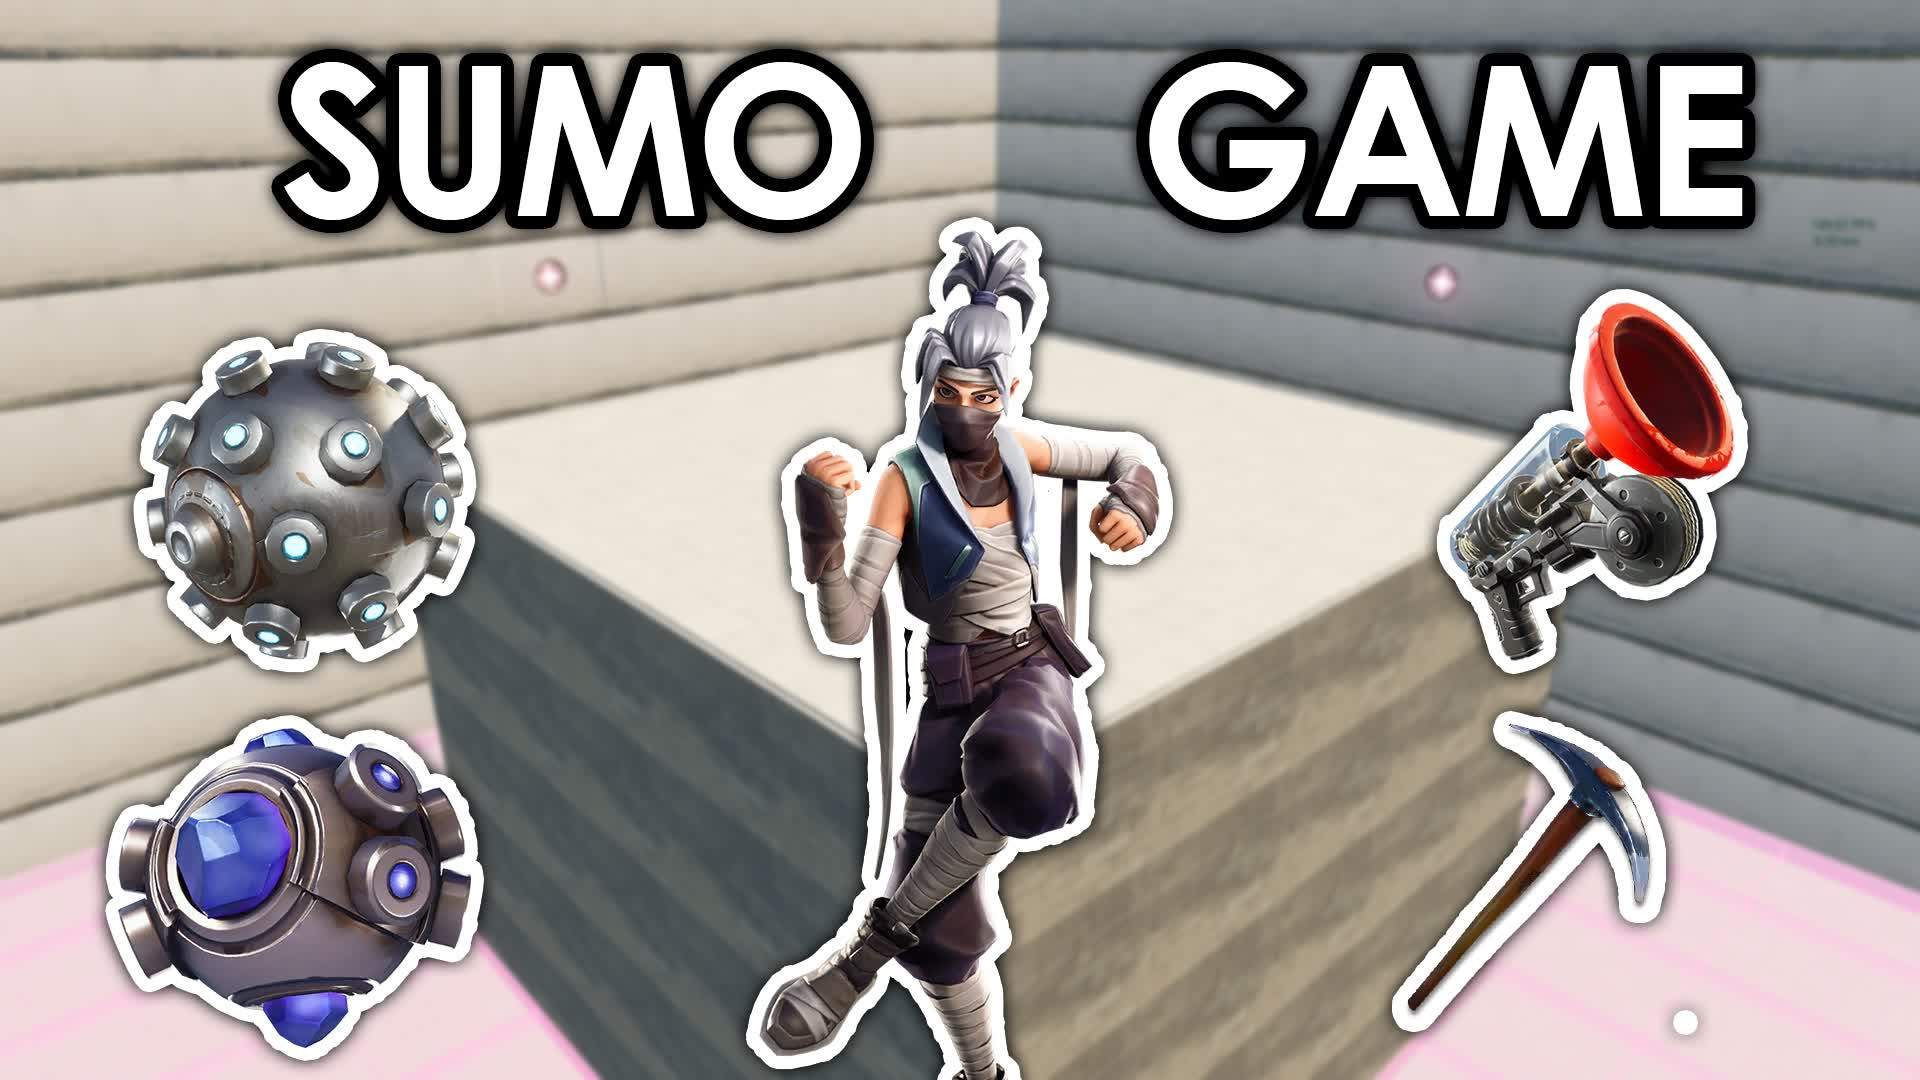 SUMO GAME V3